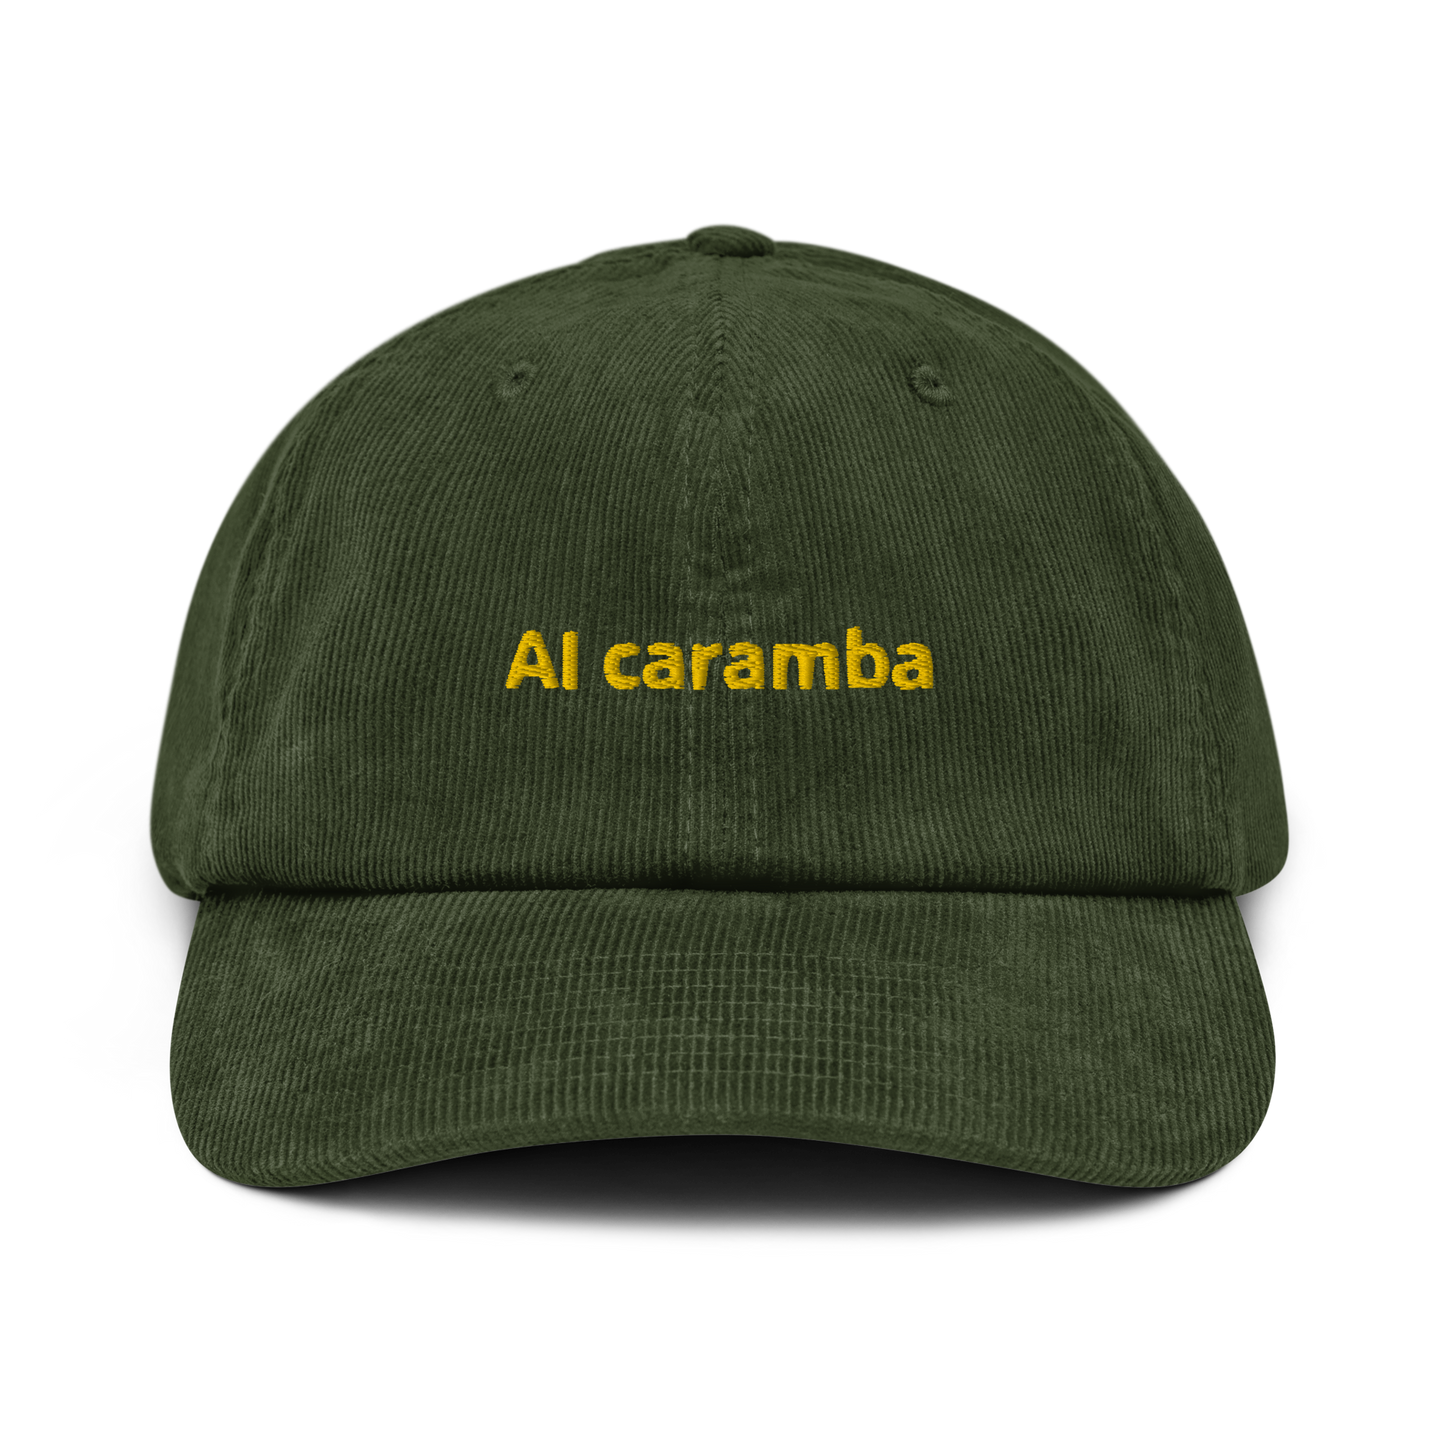 AI caramba - Corduroy hat